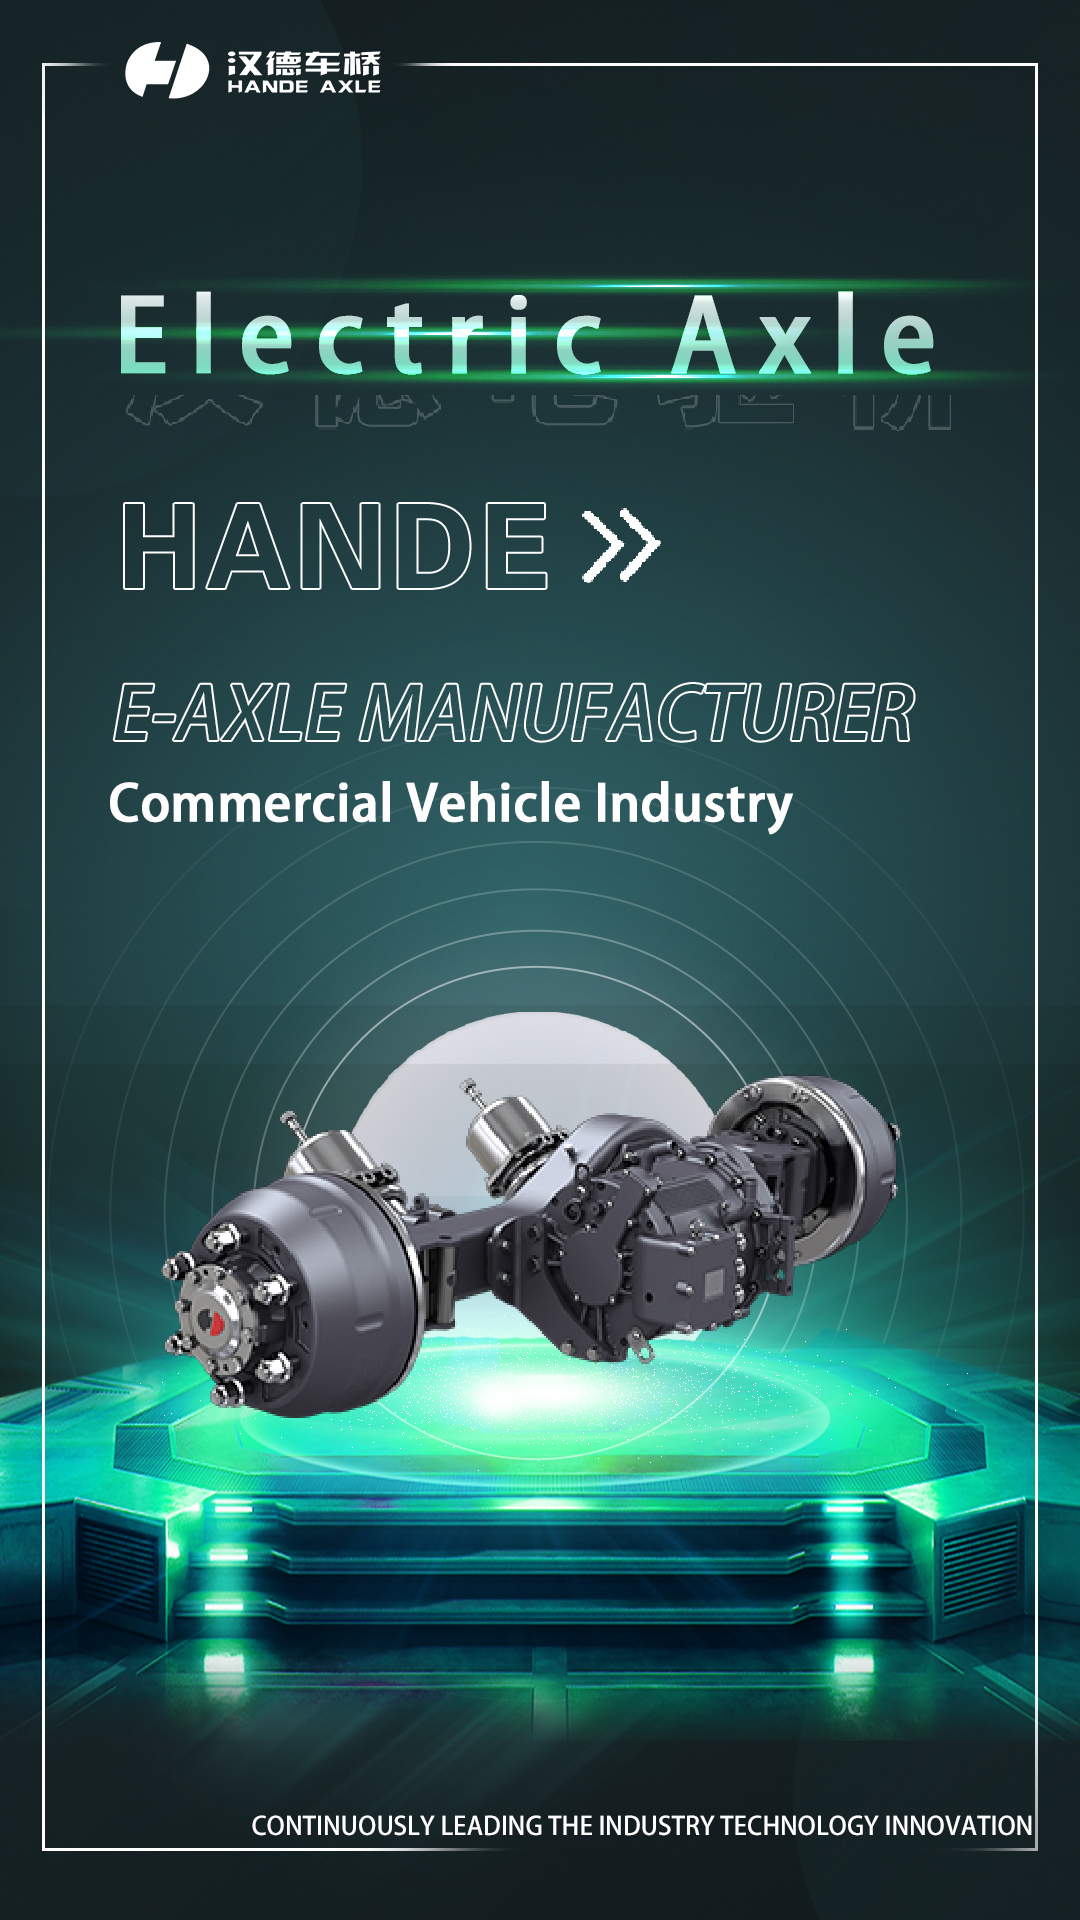 HanDe E-axle monthly sales volume exceeds 1,500 pieces